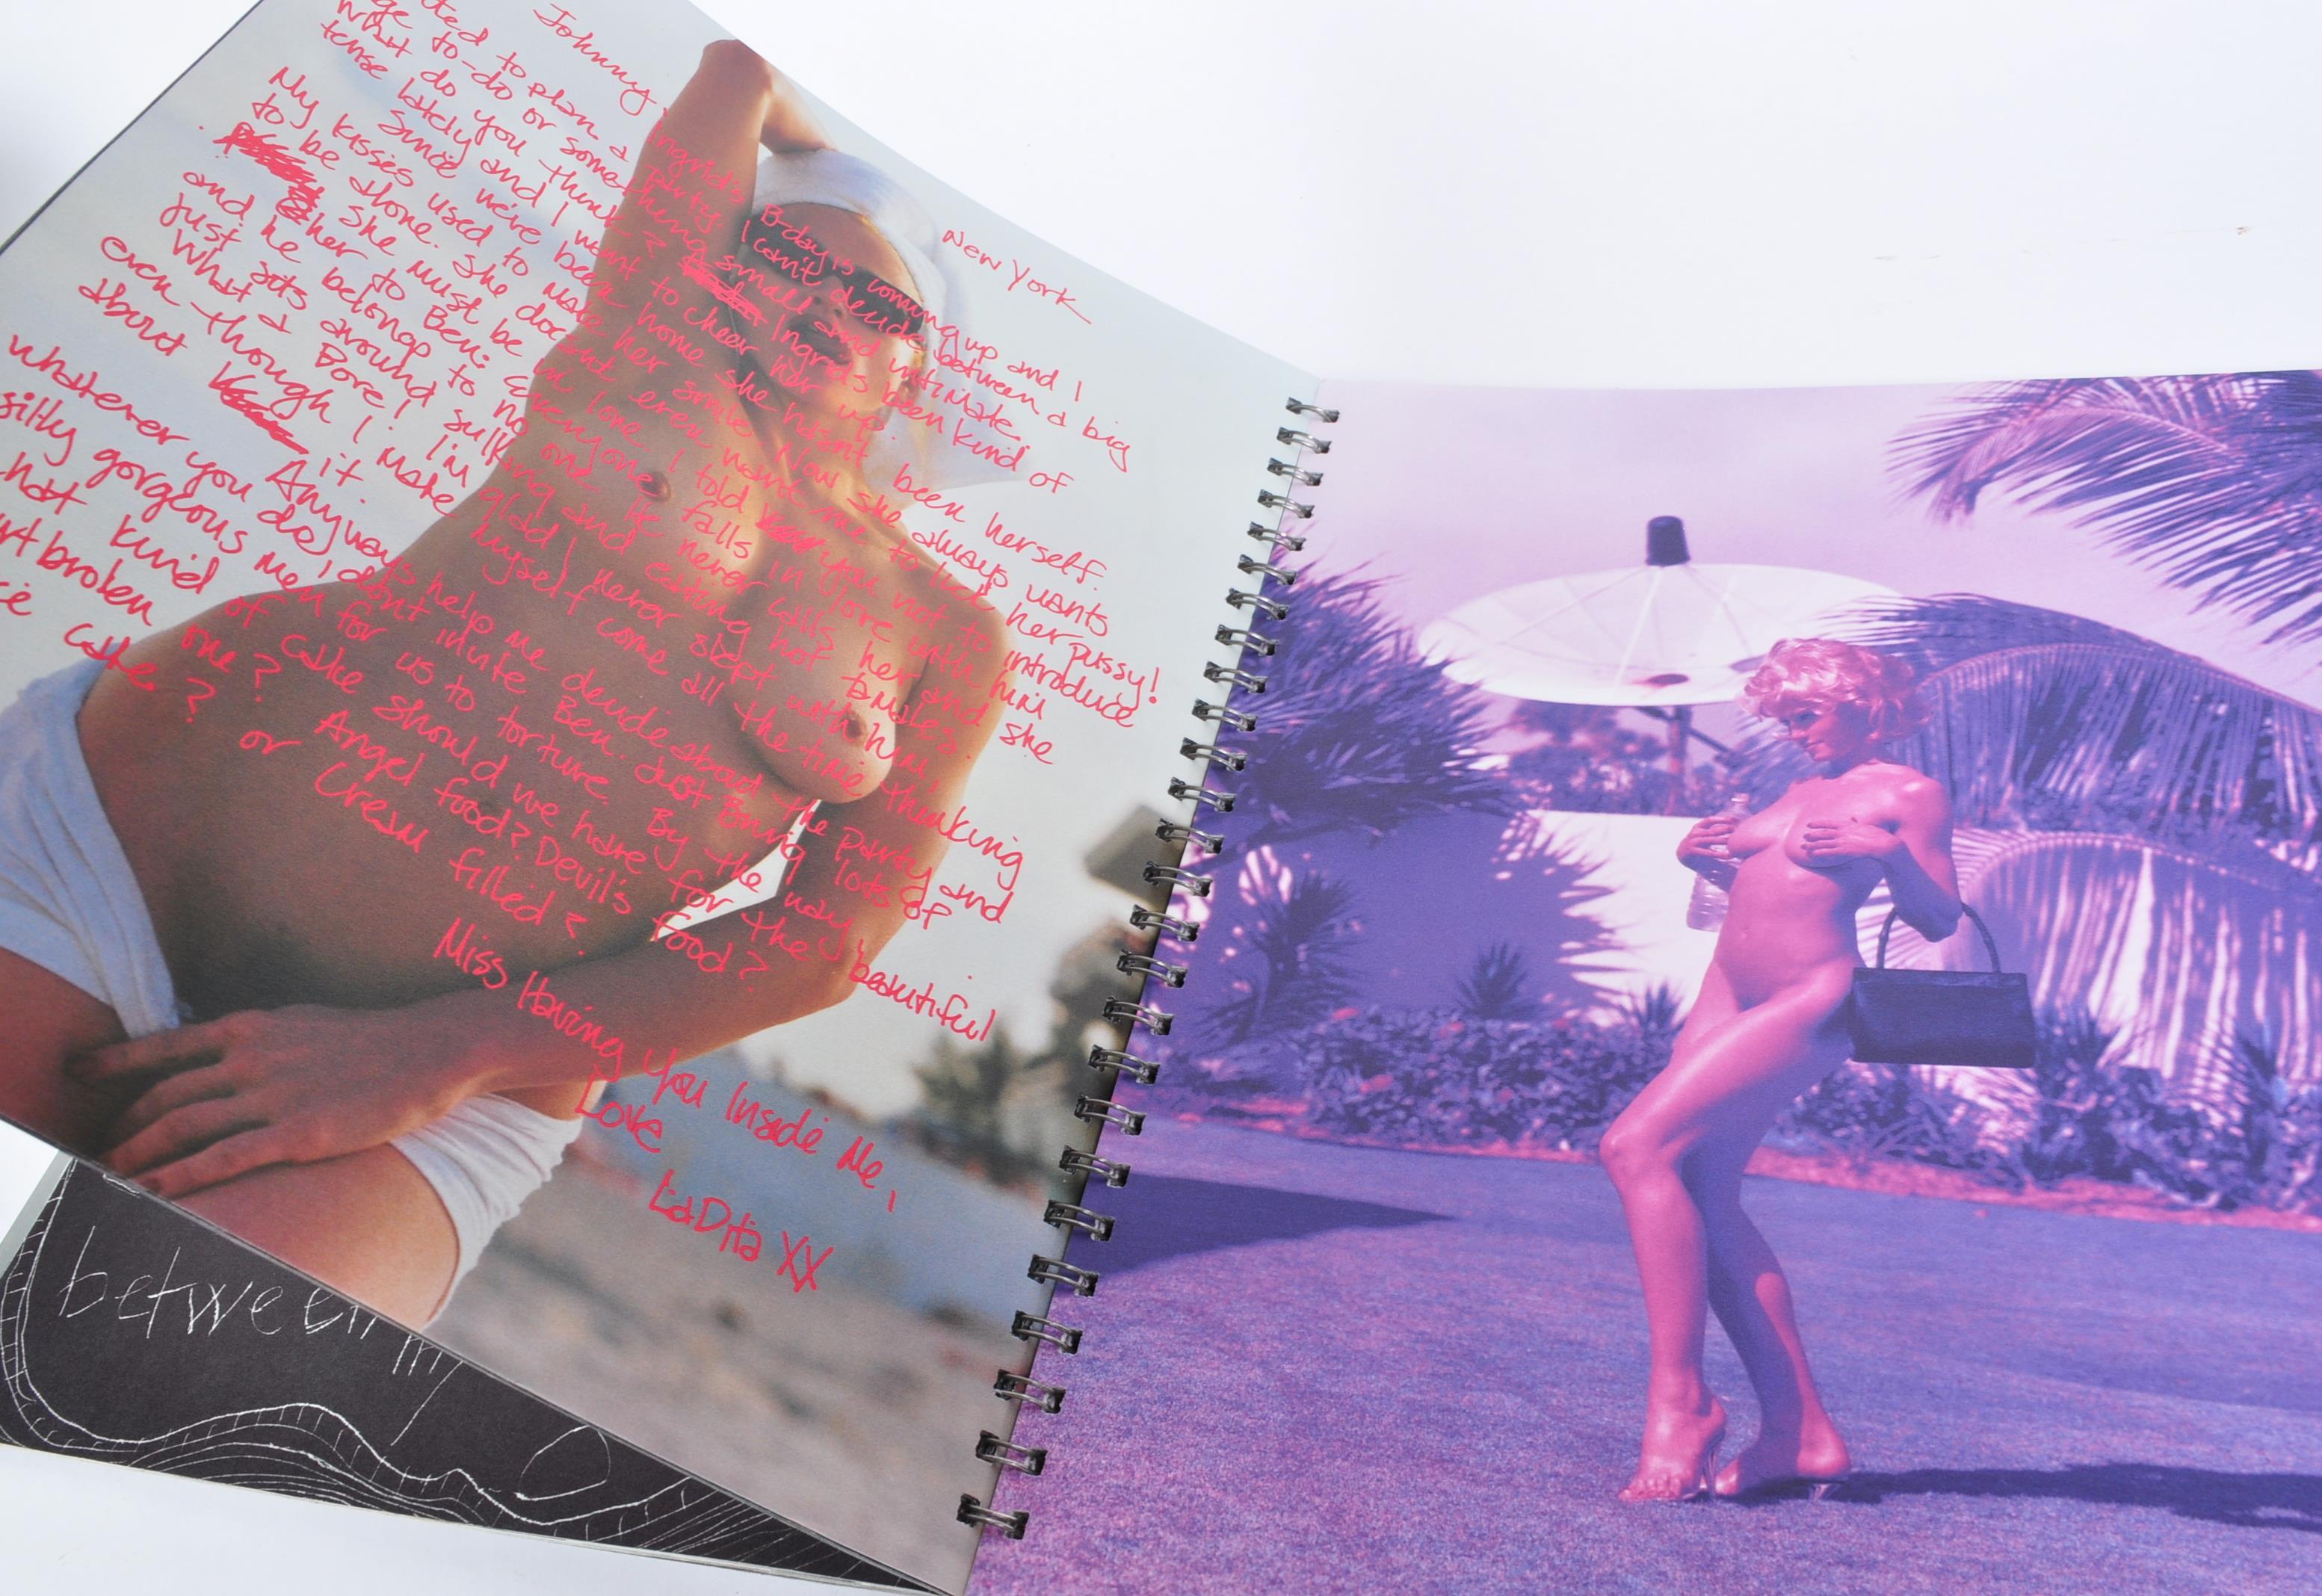 MADONNA - SEX - STEEL COVER EROTICA BOOK - Image 6 of 6